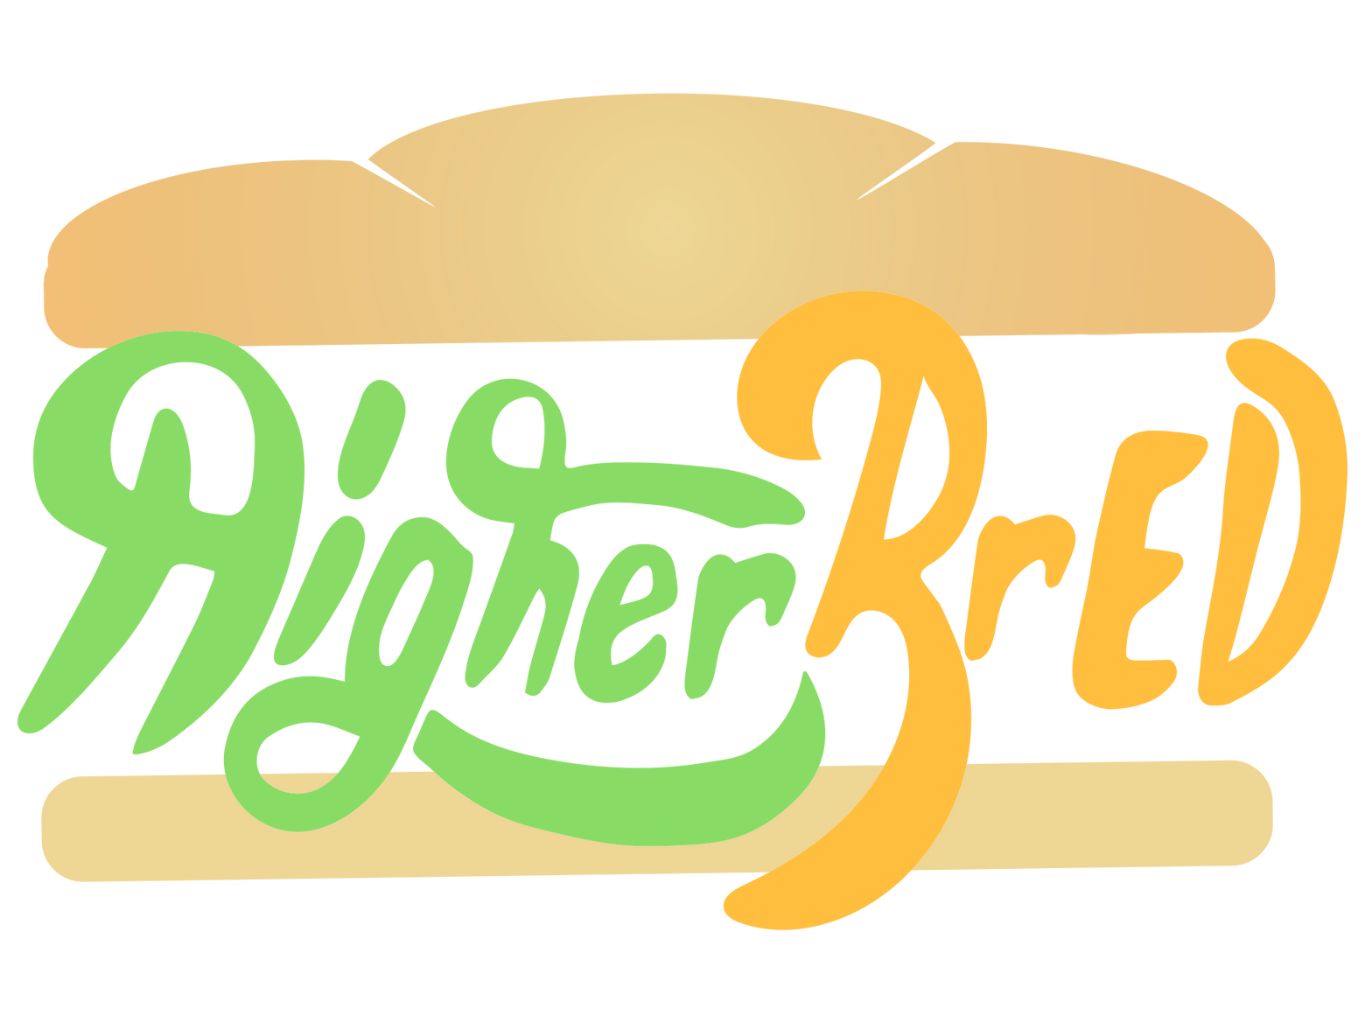 Higherbred logo